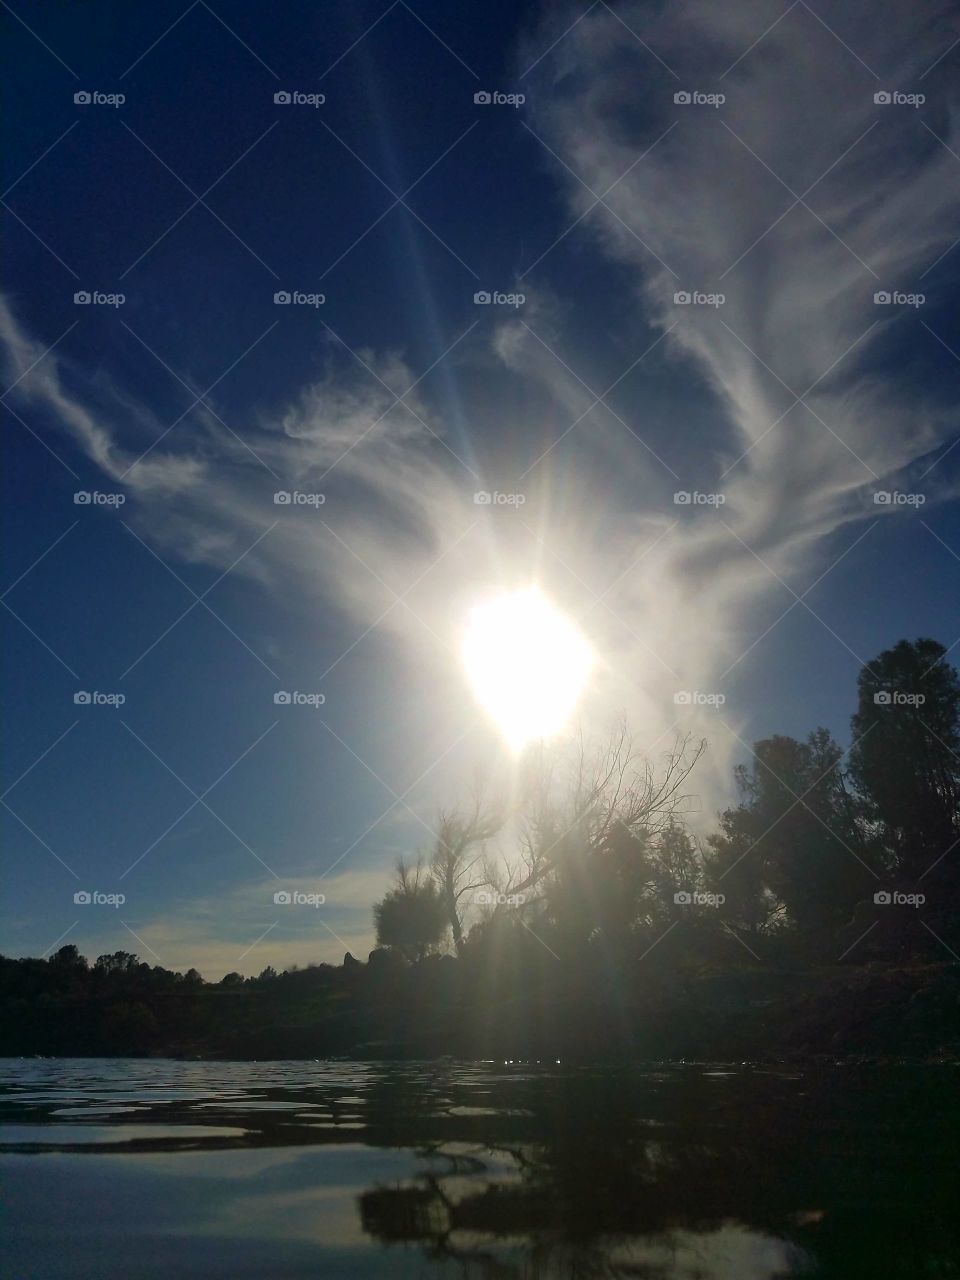 Cloud over Folsom lake